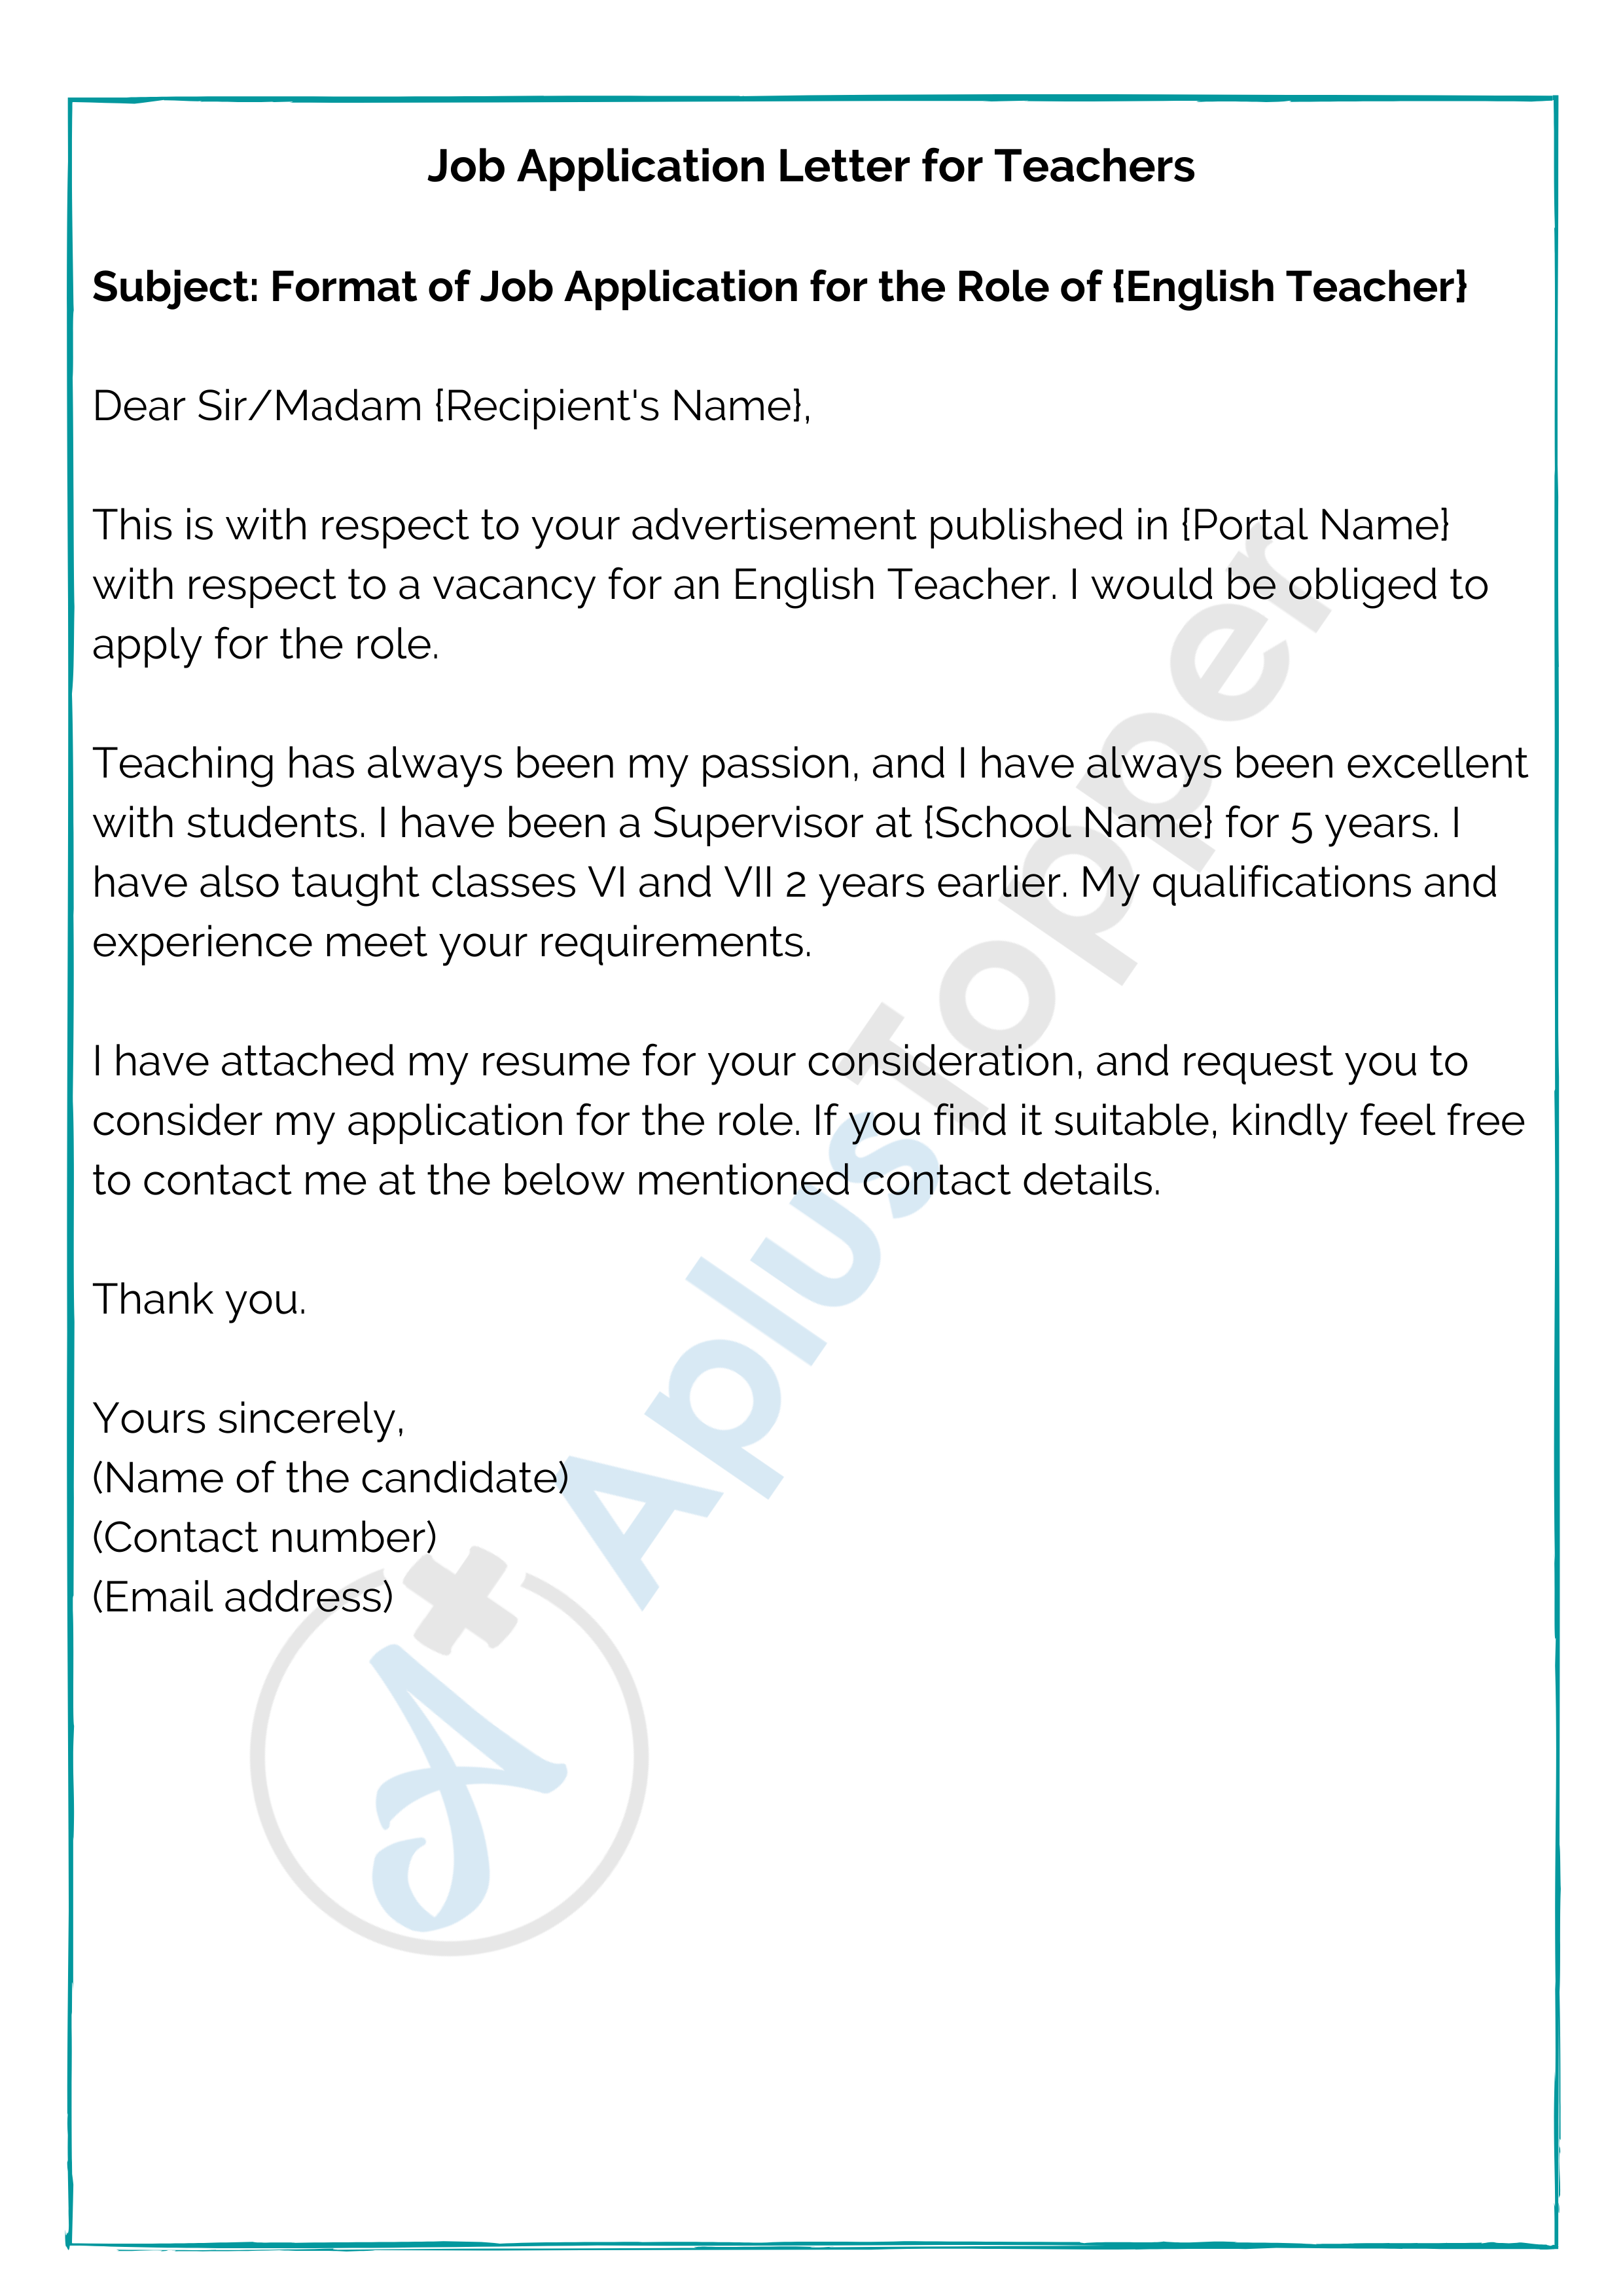 make a job application letter